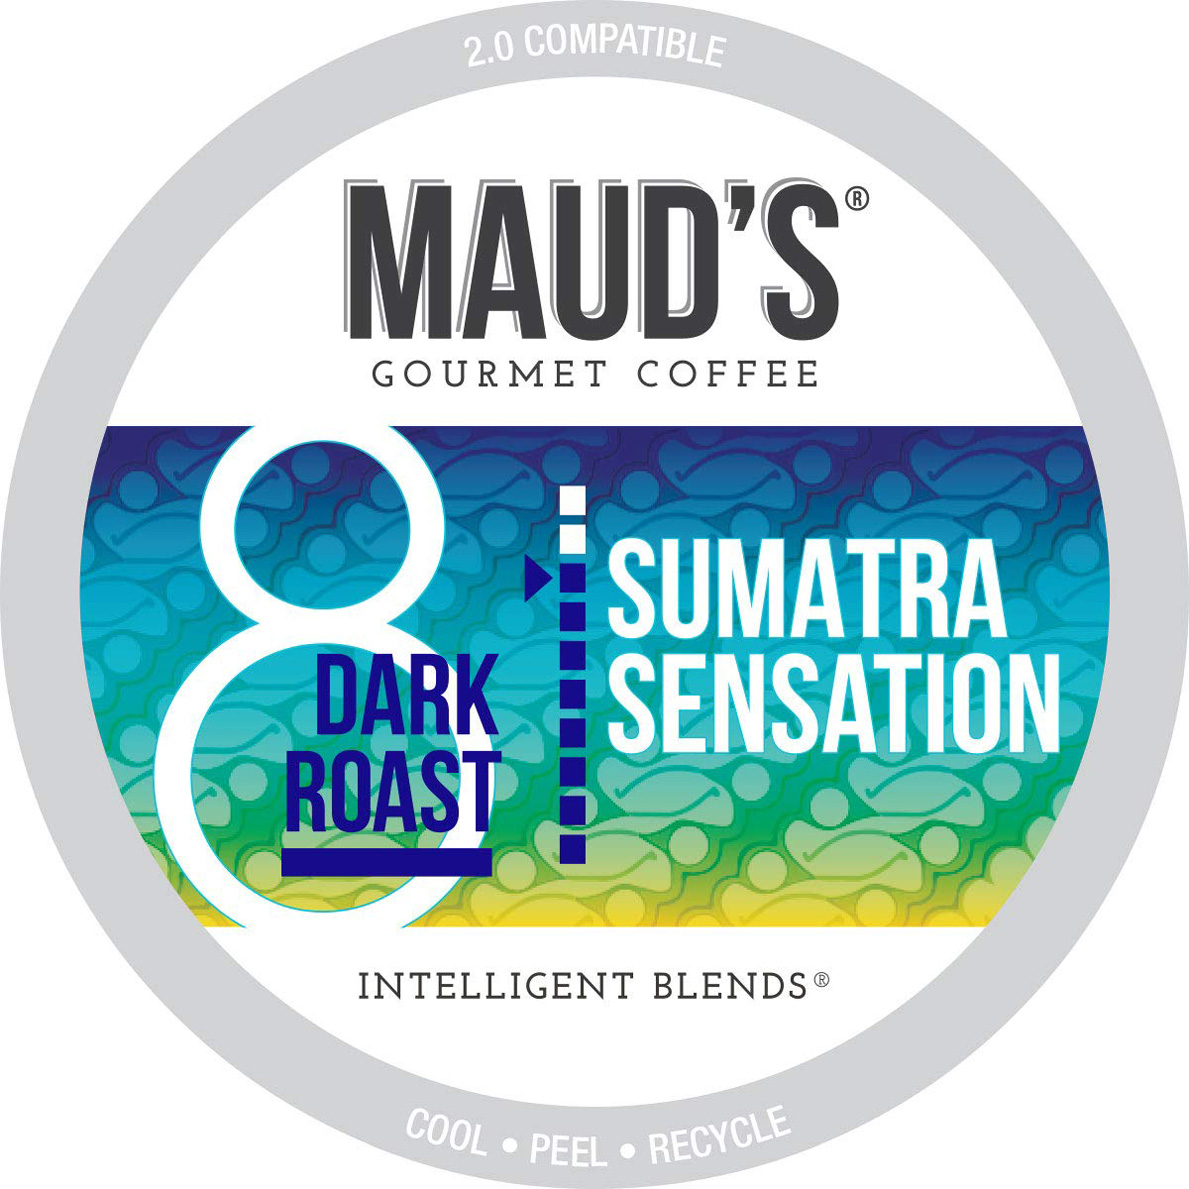 Maud’s Dark Roast Sumatra Coffee (Sumatra Sensation), 100ct. Recyclable Single Serve Single Origin Dark Roast Coffee Pods